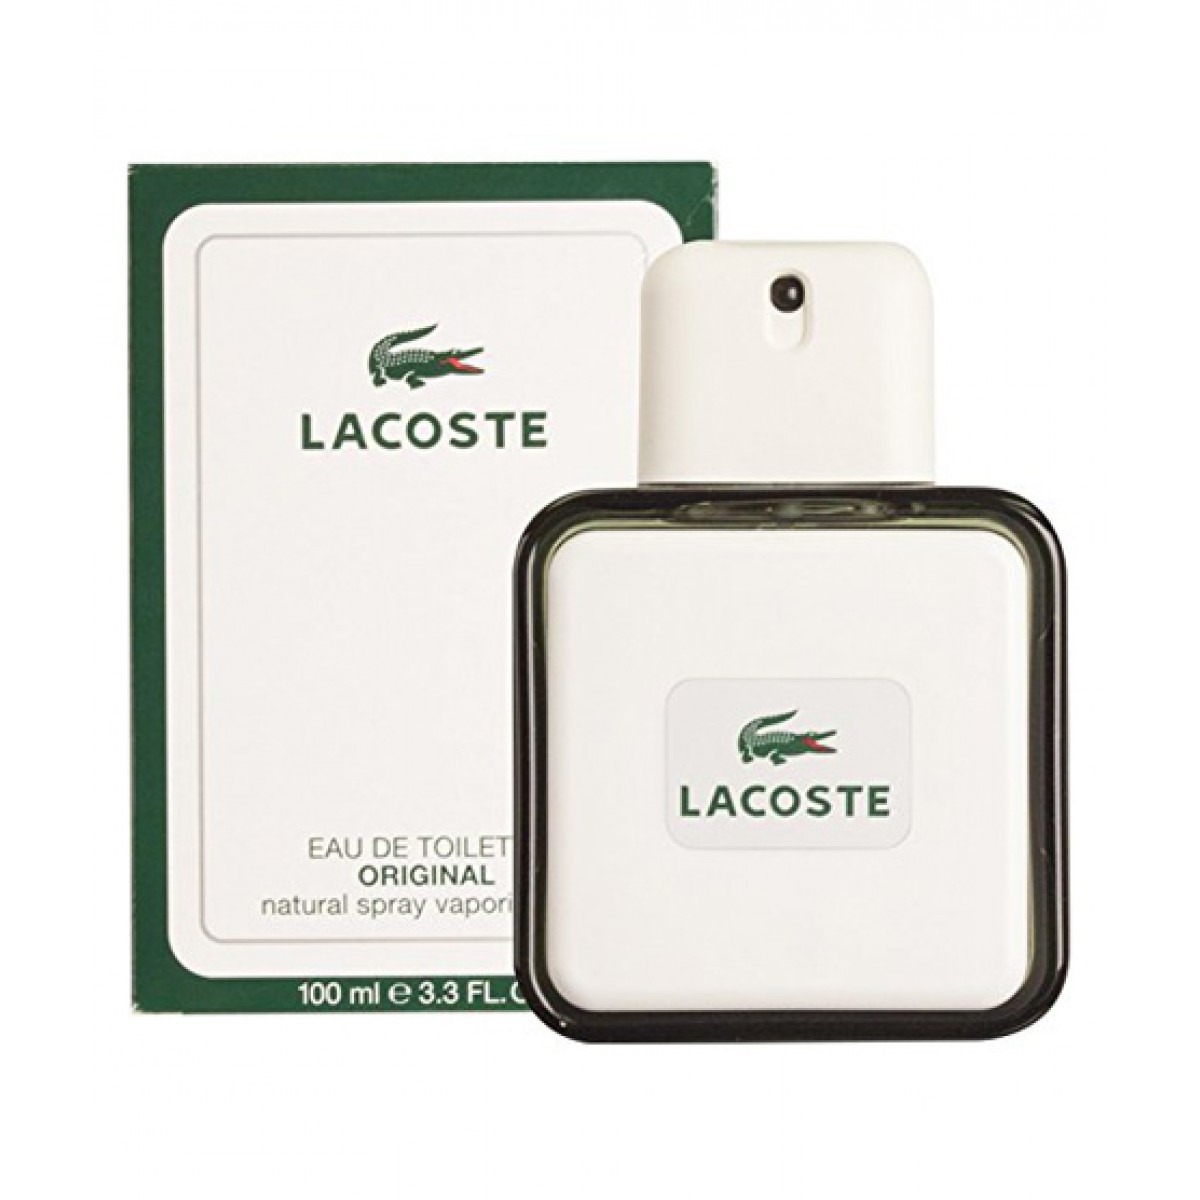 lacoste original men's fragrance